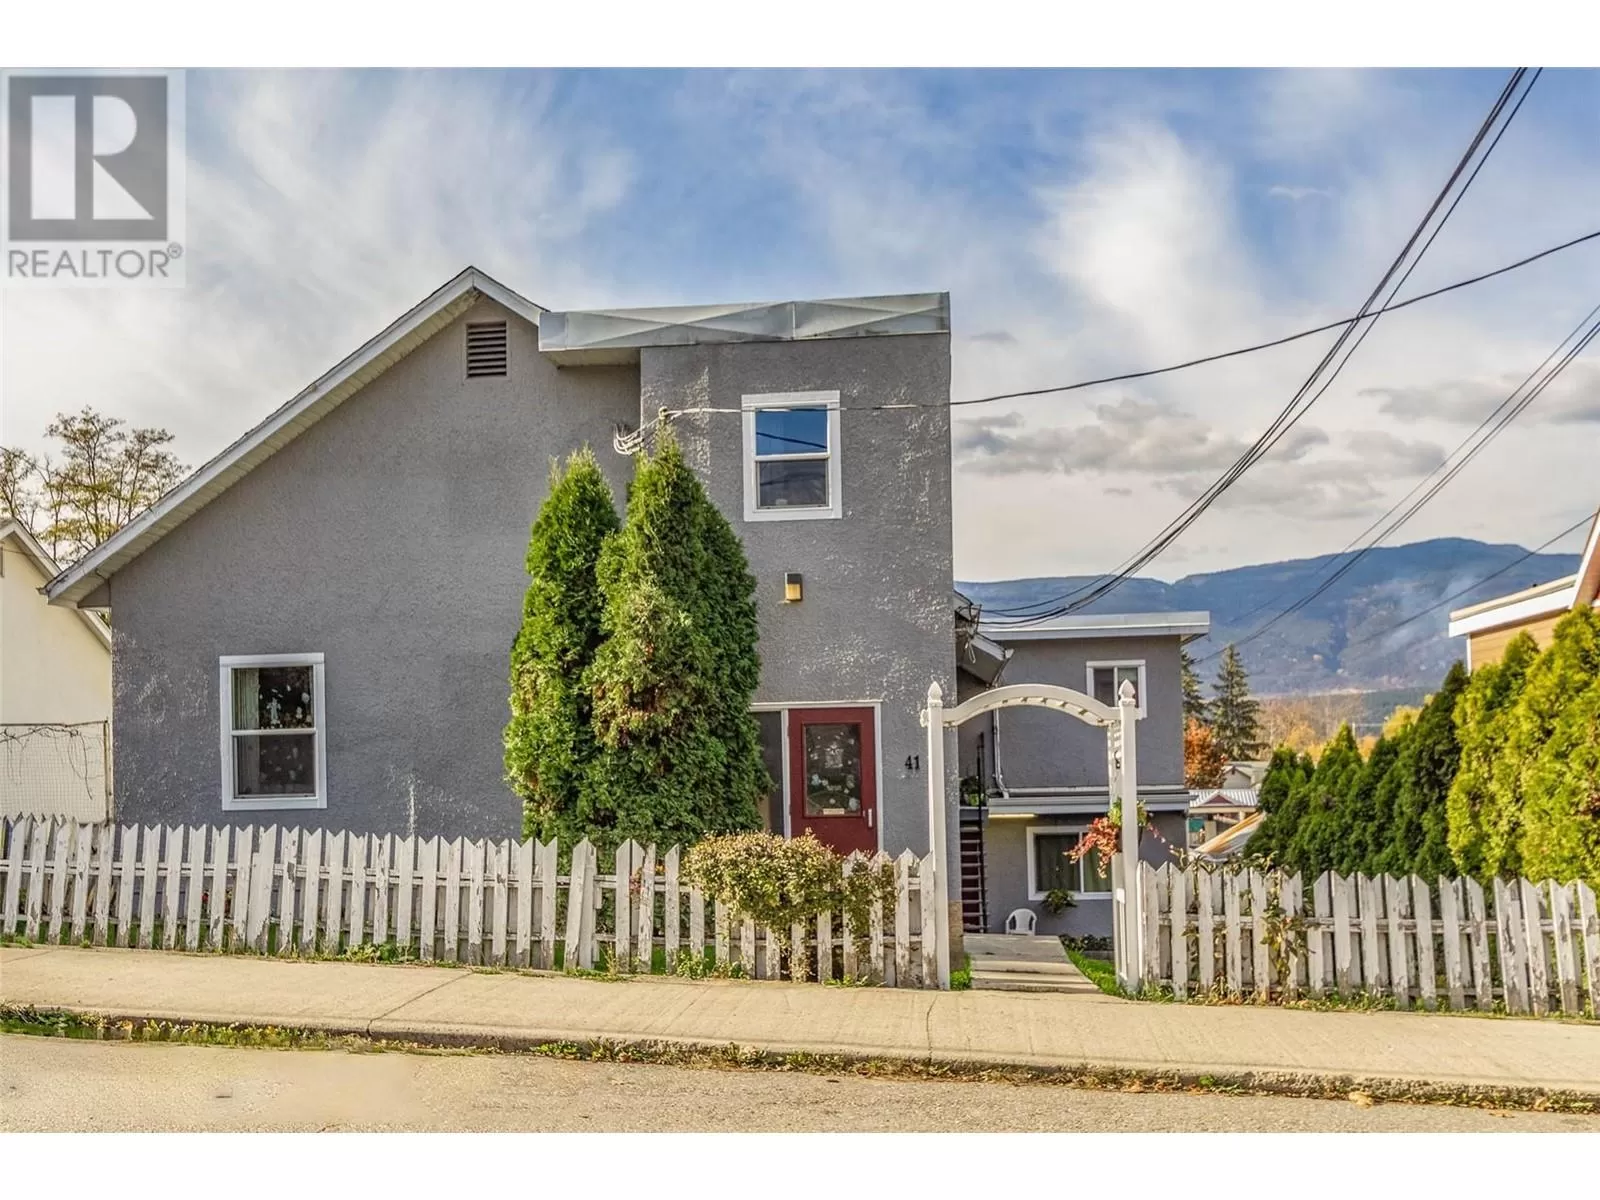 Multi-Family for rent: 41 3 Street Se, Salmon Arm, British Columbia V1E 1H6